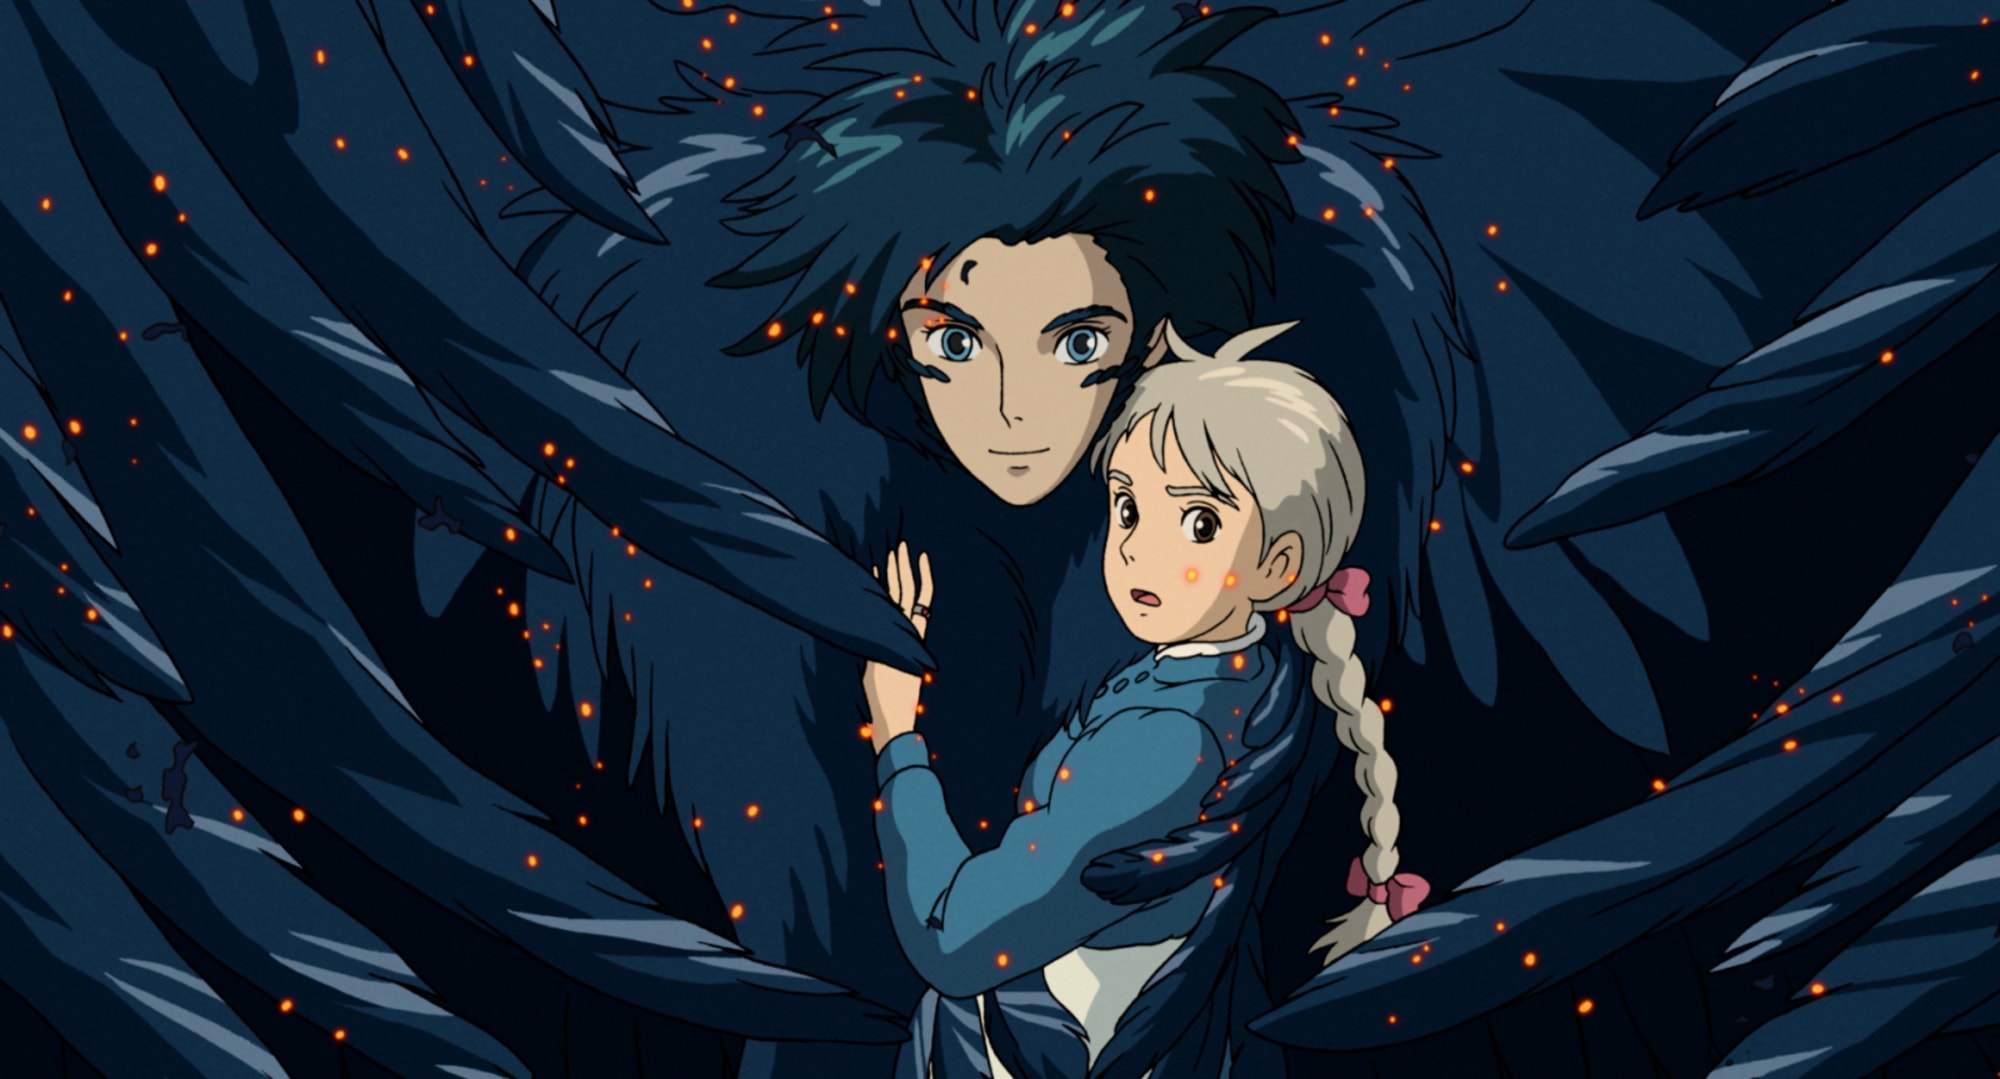 Fans' favorite Studio Ghibli movies based on age group is fascinating